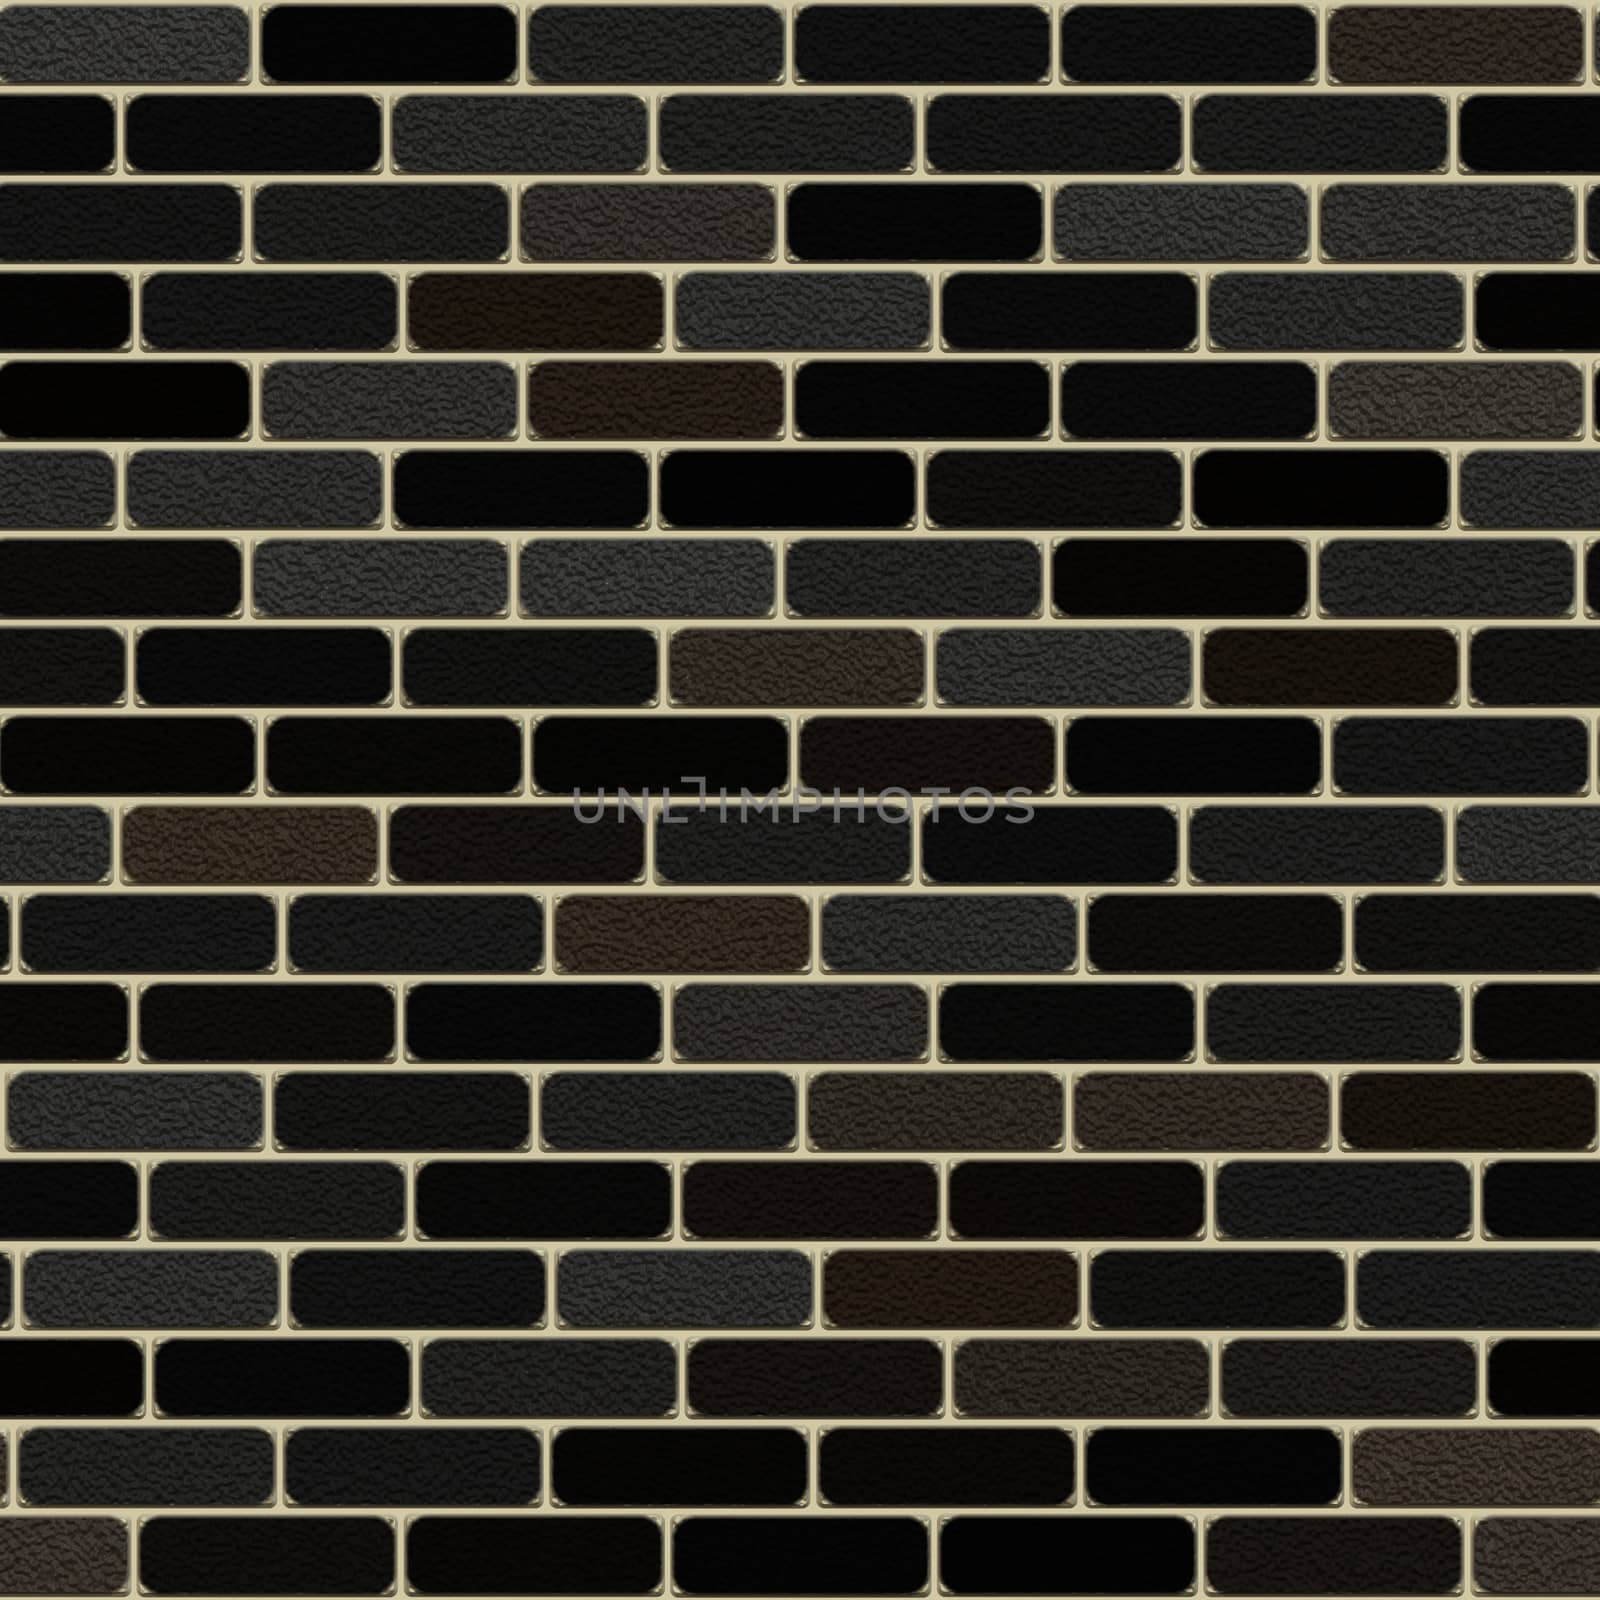 brick wall texture background seamless cgi black and grey by Nanisimova